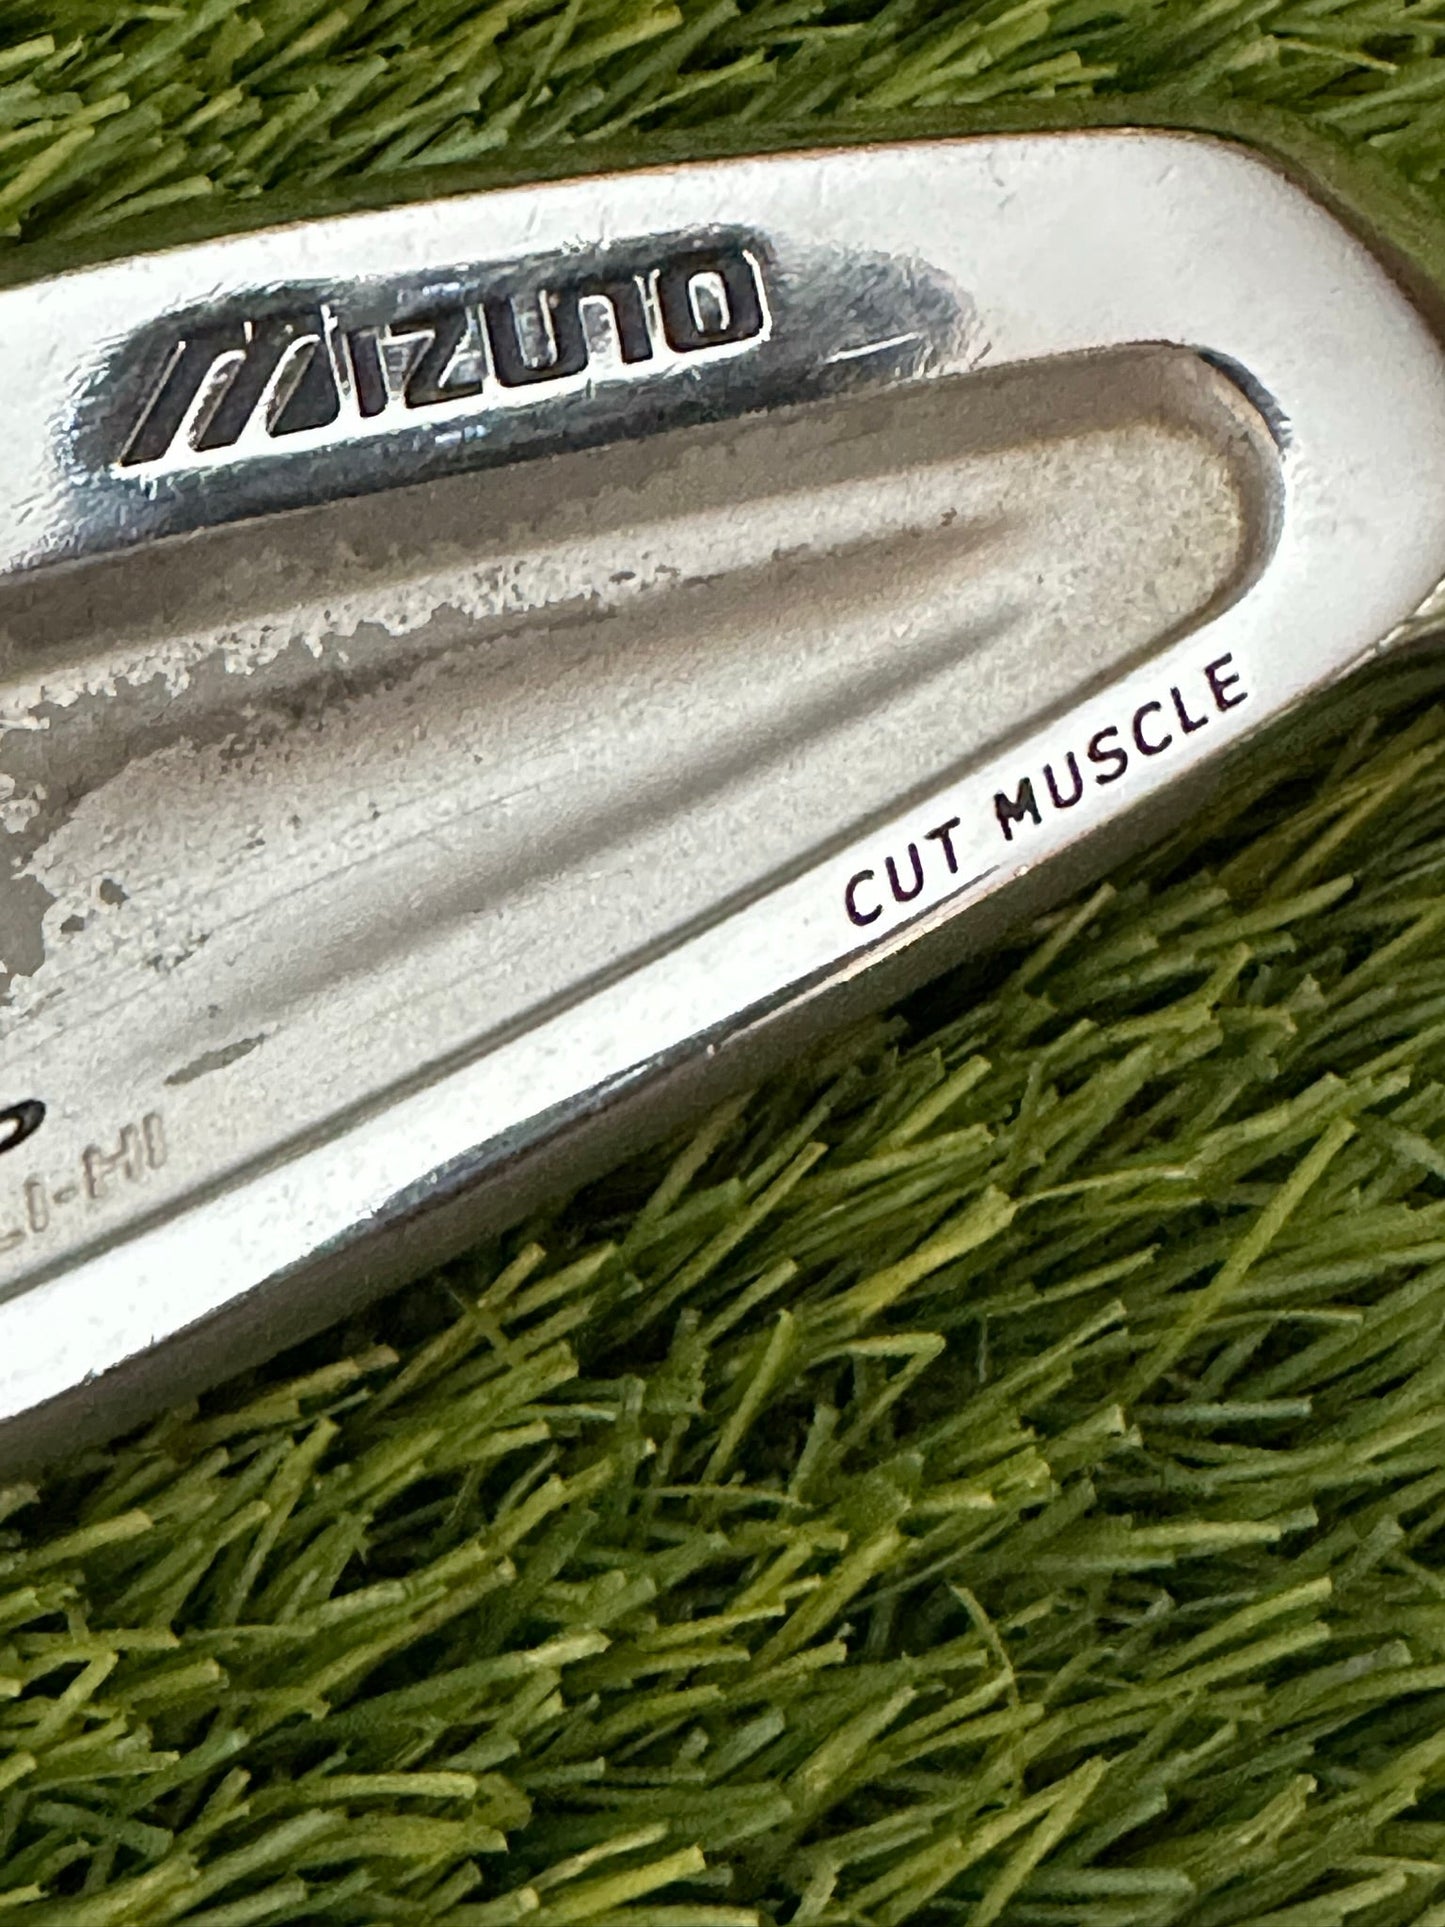 Mizuno MP FLI-HI Cut Muscle 3 Iron - Golf Store UK